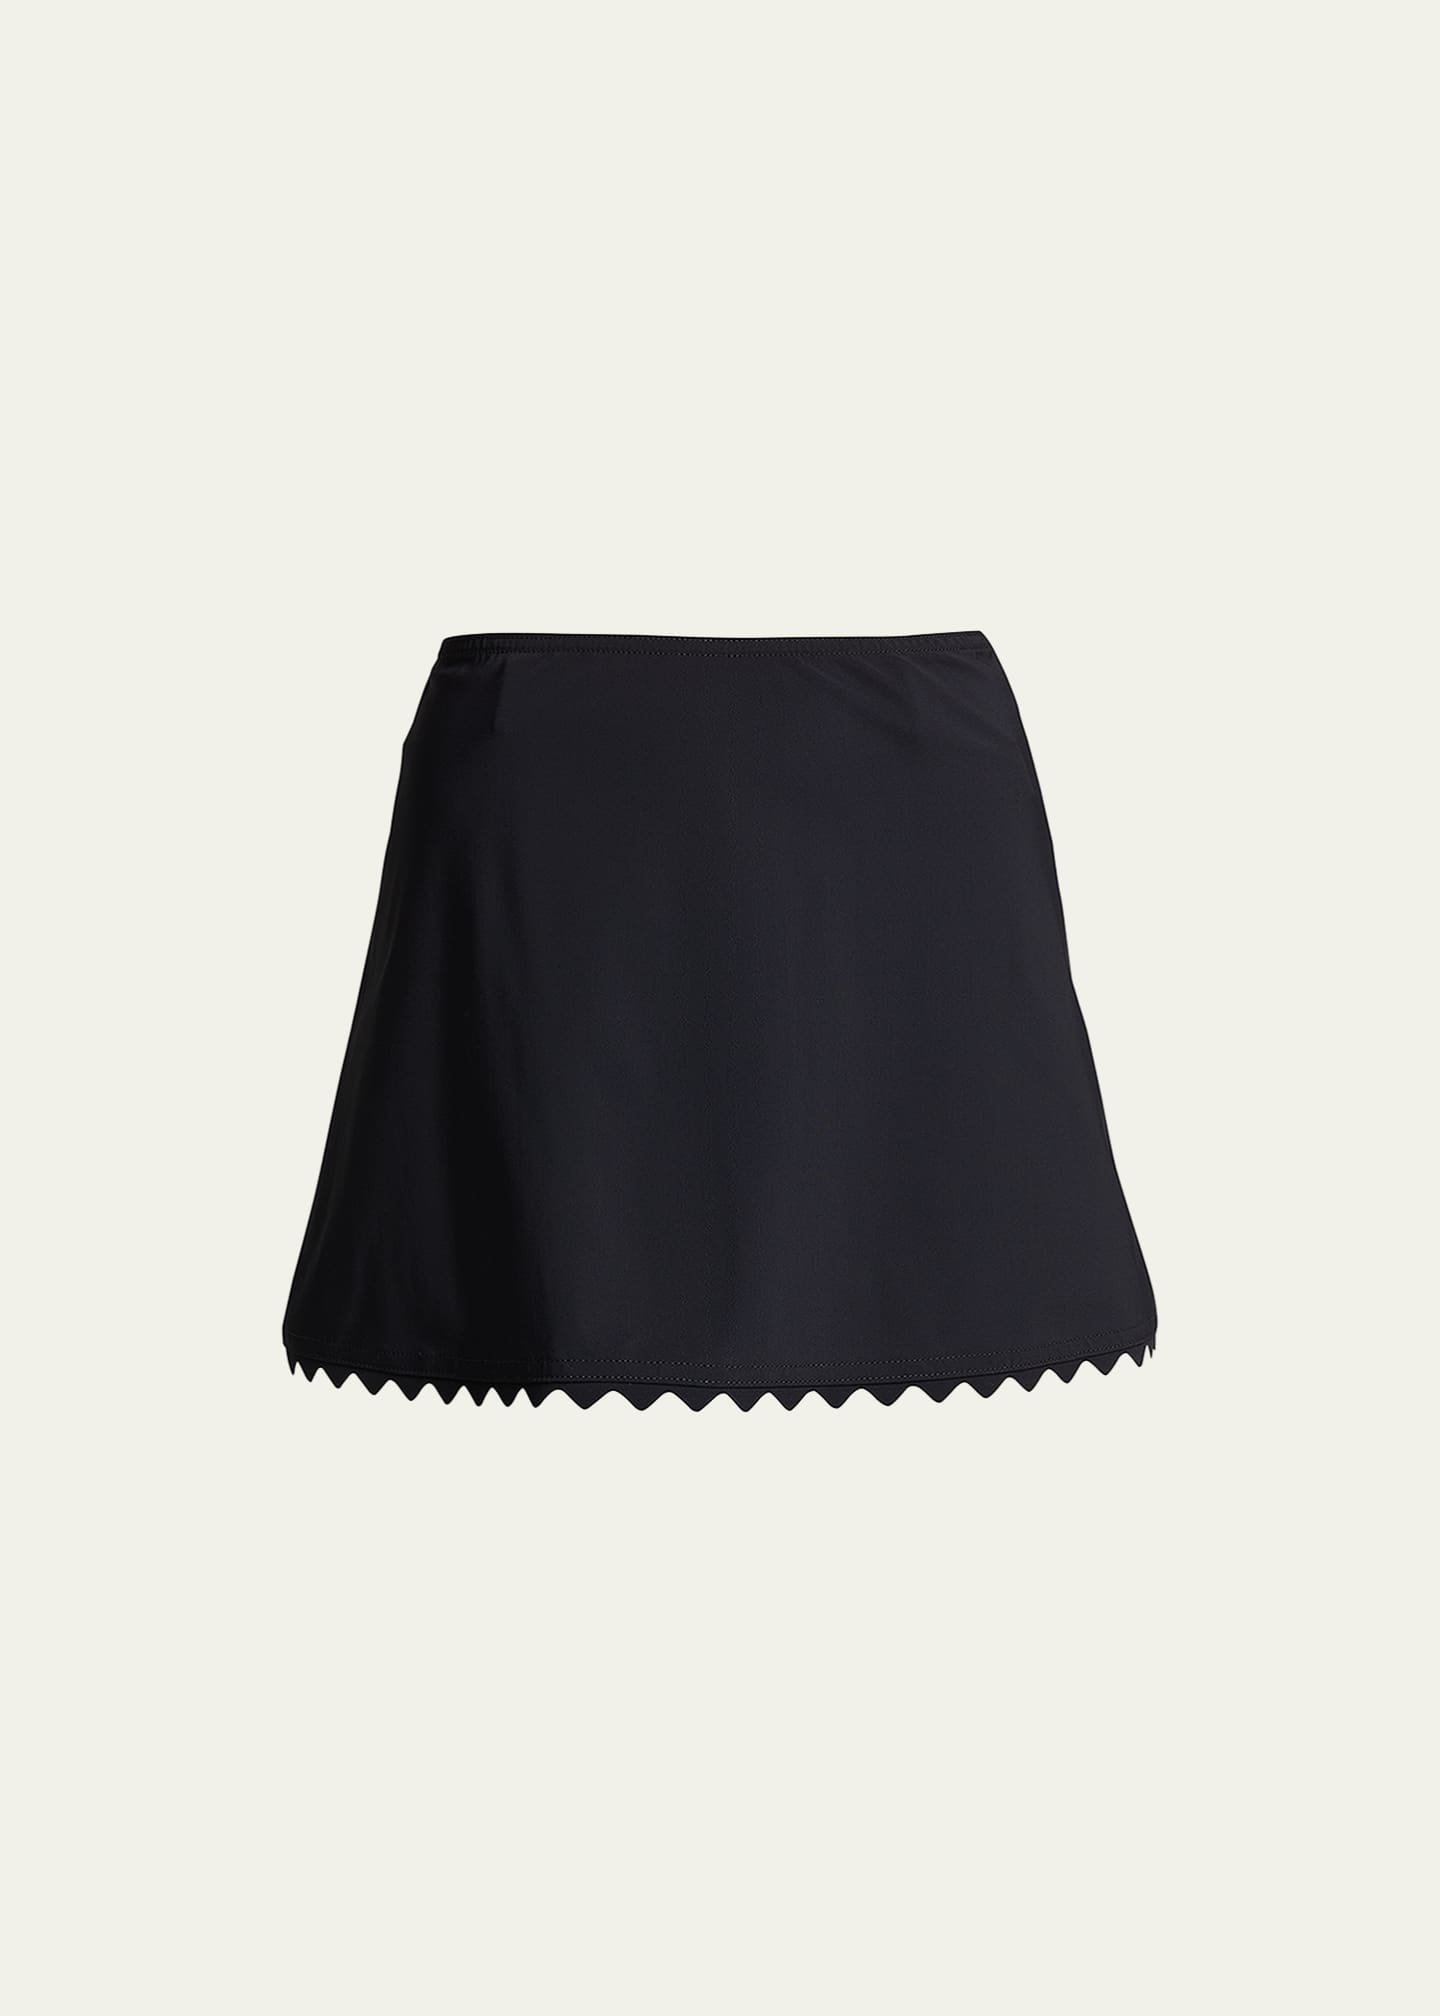 Karla Colletto Ines Coverup Mini A-Line Skirt - Bergdorf Goodman